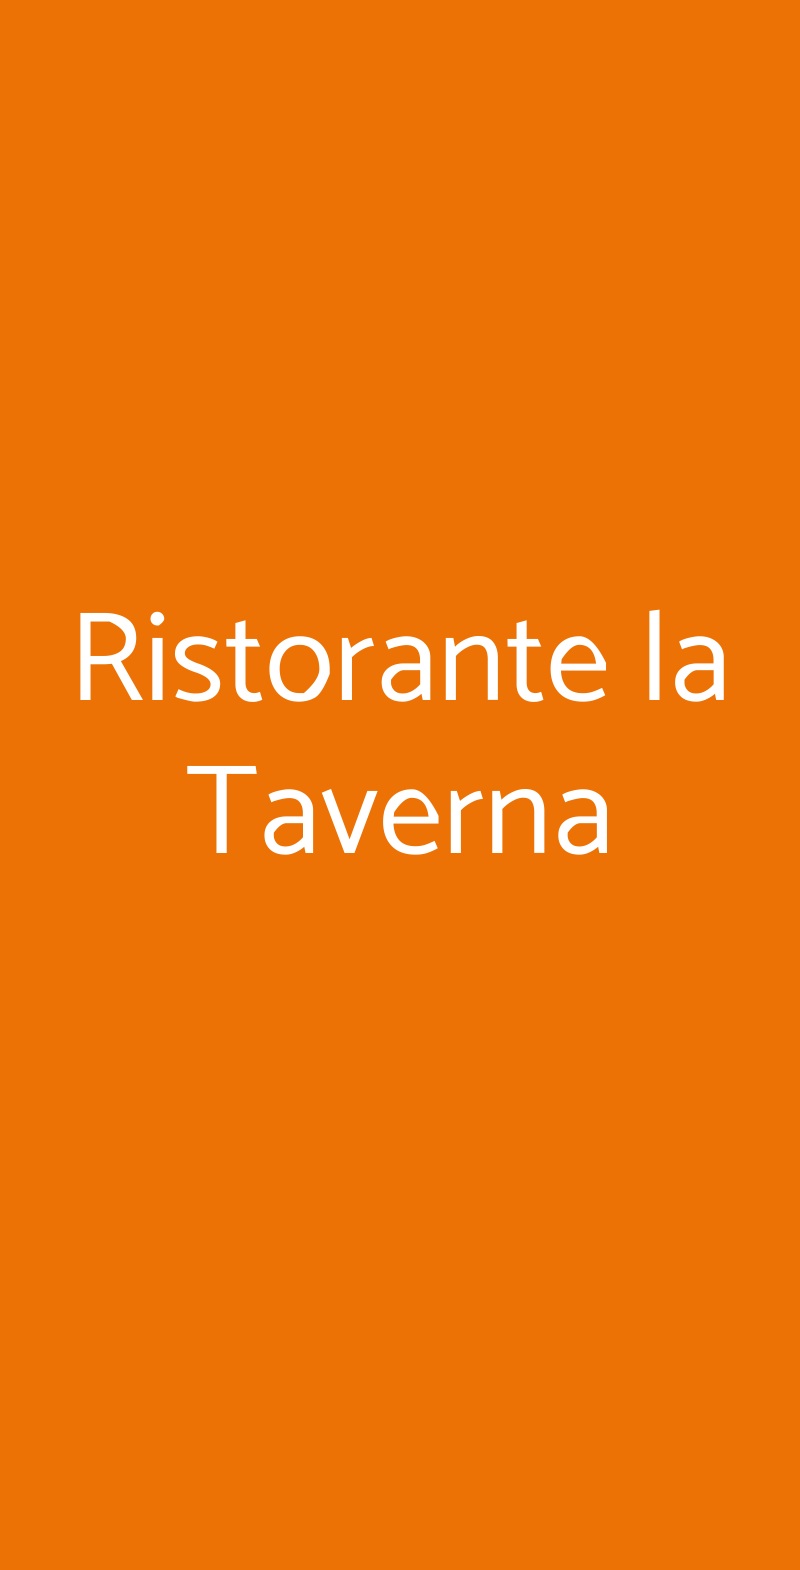 Ristorante la Taverna Roma menù 1 pagina